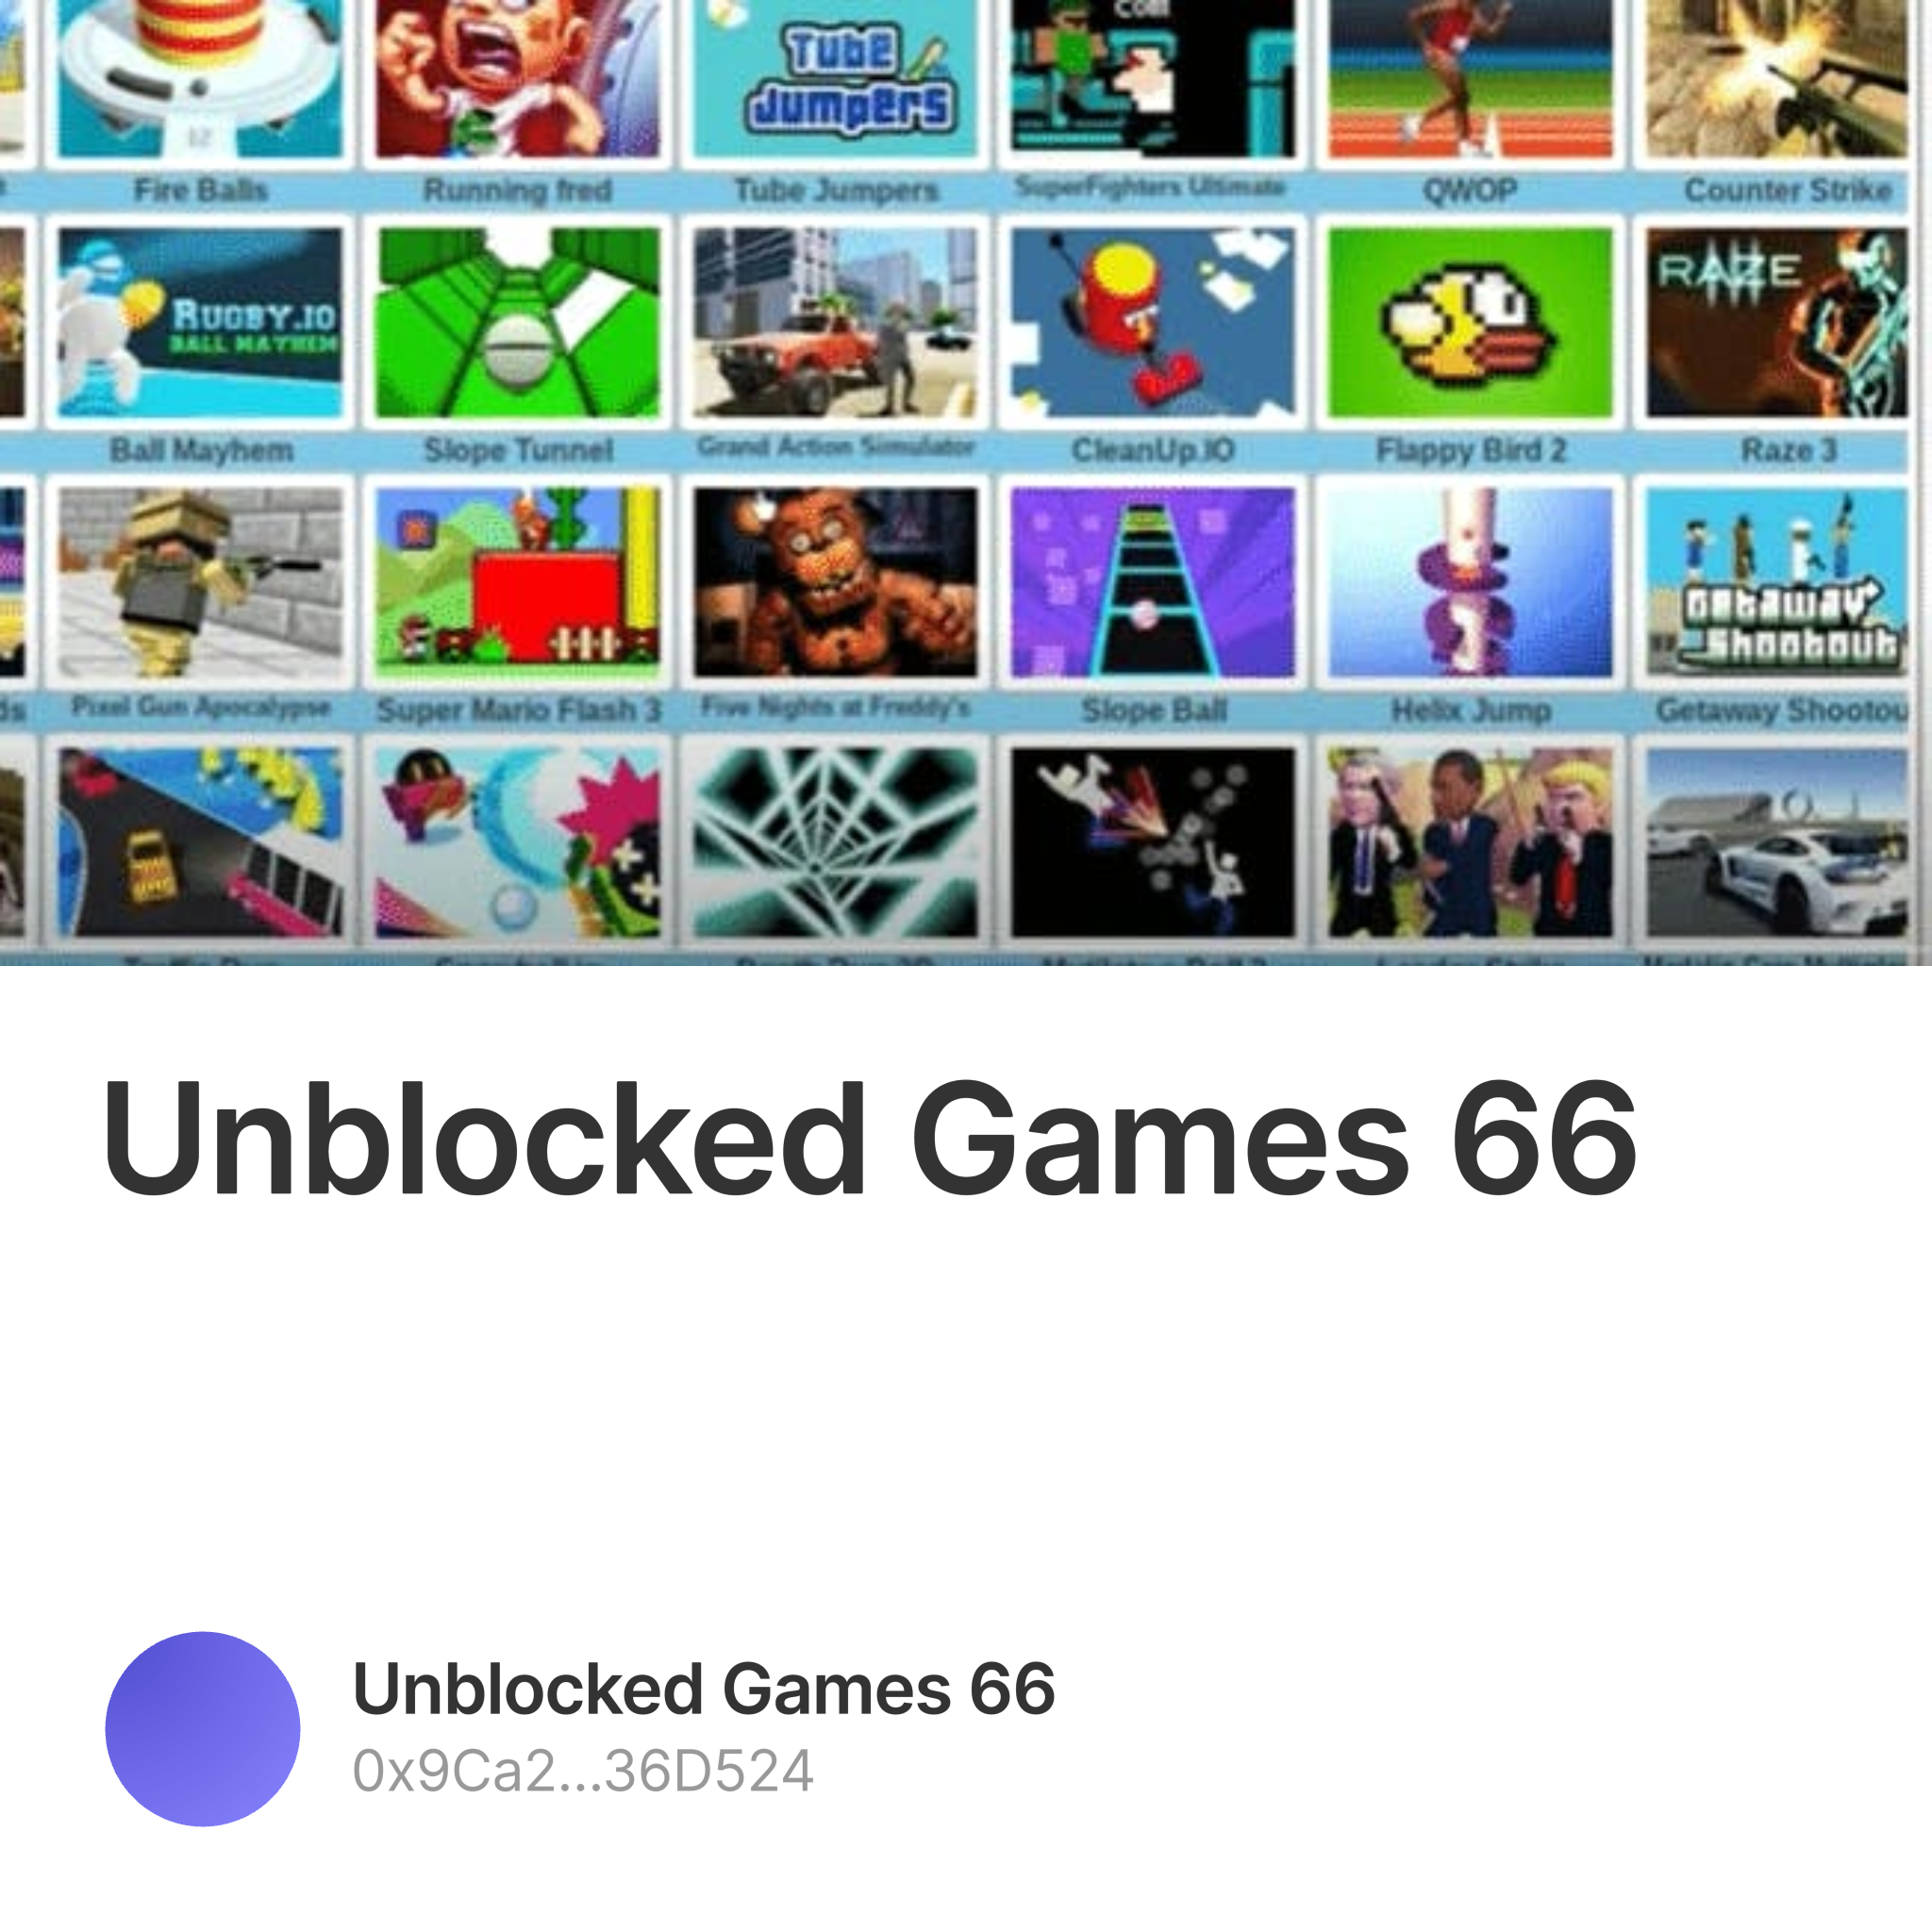 225 Best) Unblocked Games 66ez – The Best Free Online Games – PIXIMFIX